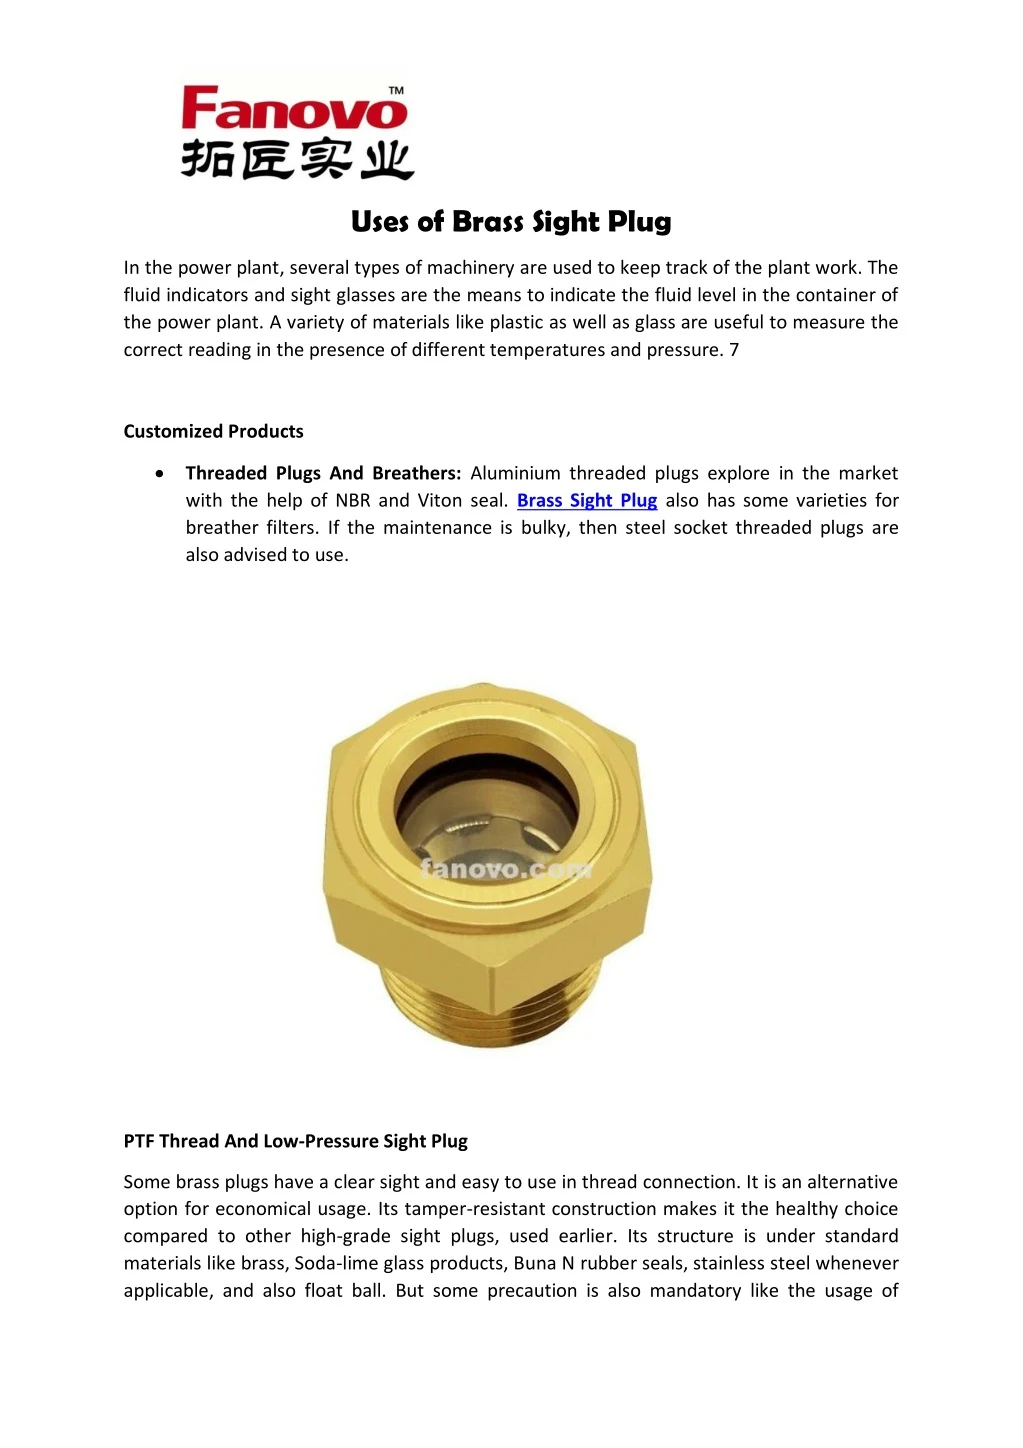 uses of brass sight plug